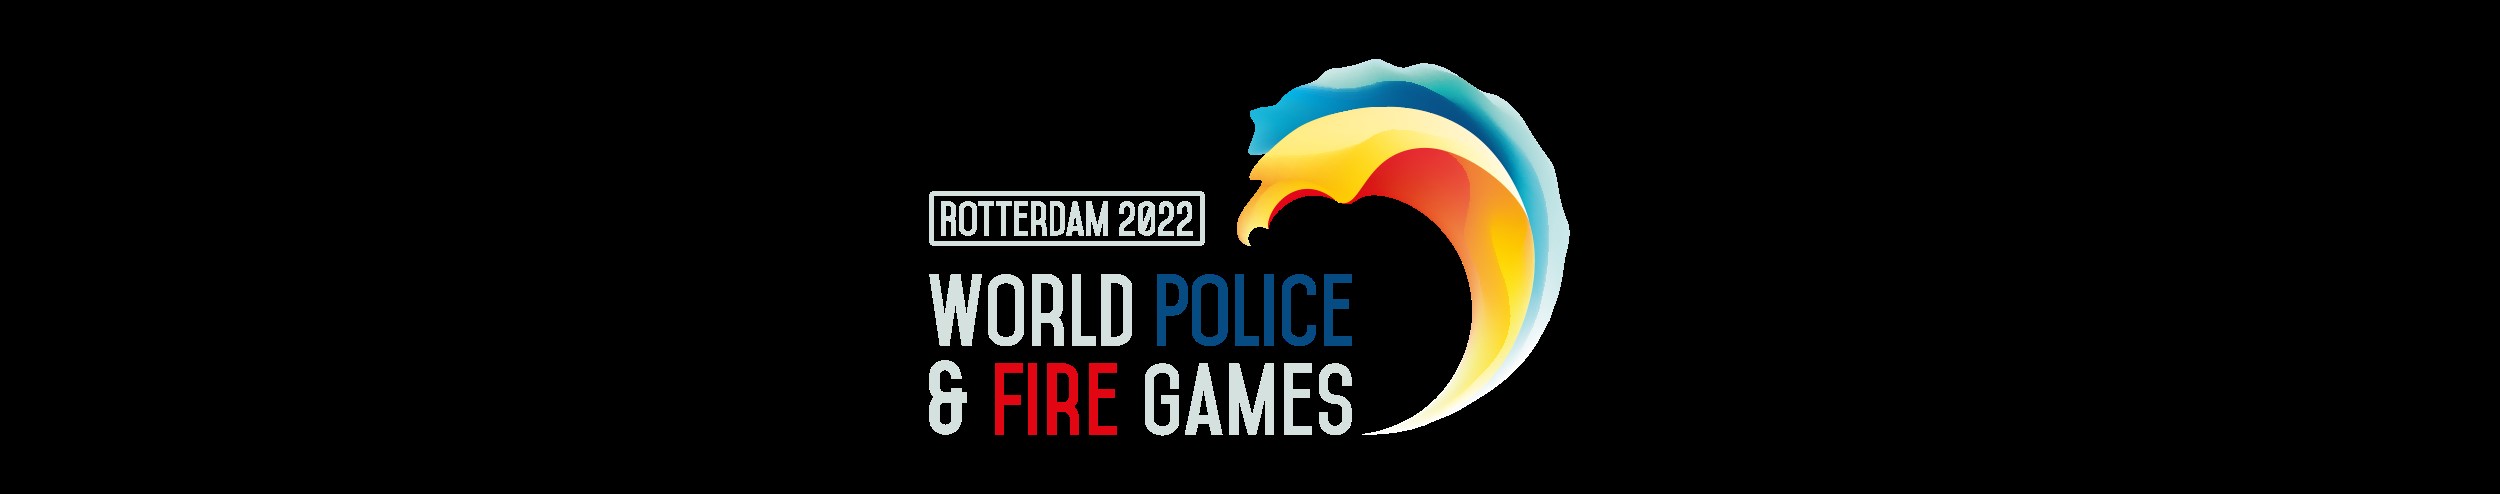 2022 World Police & Fire Games, Rotterdam